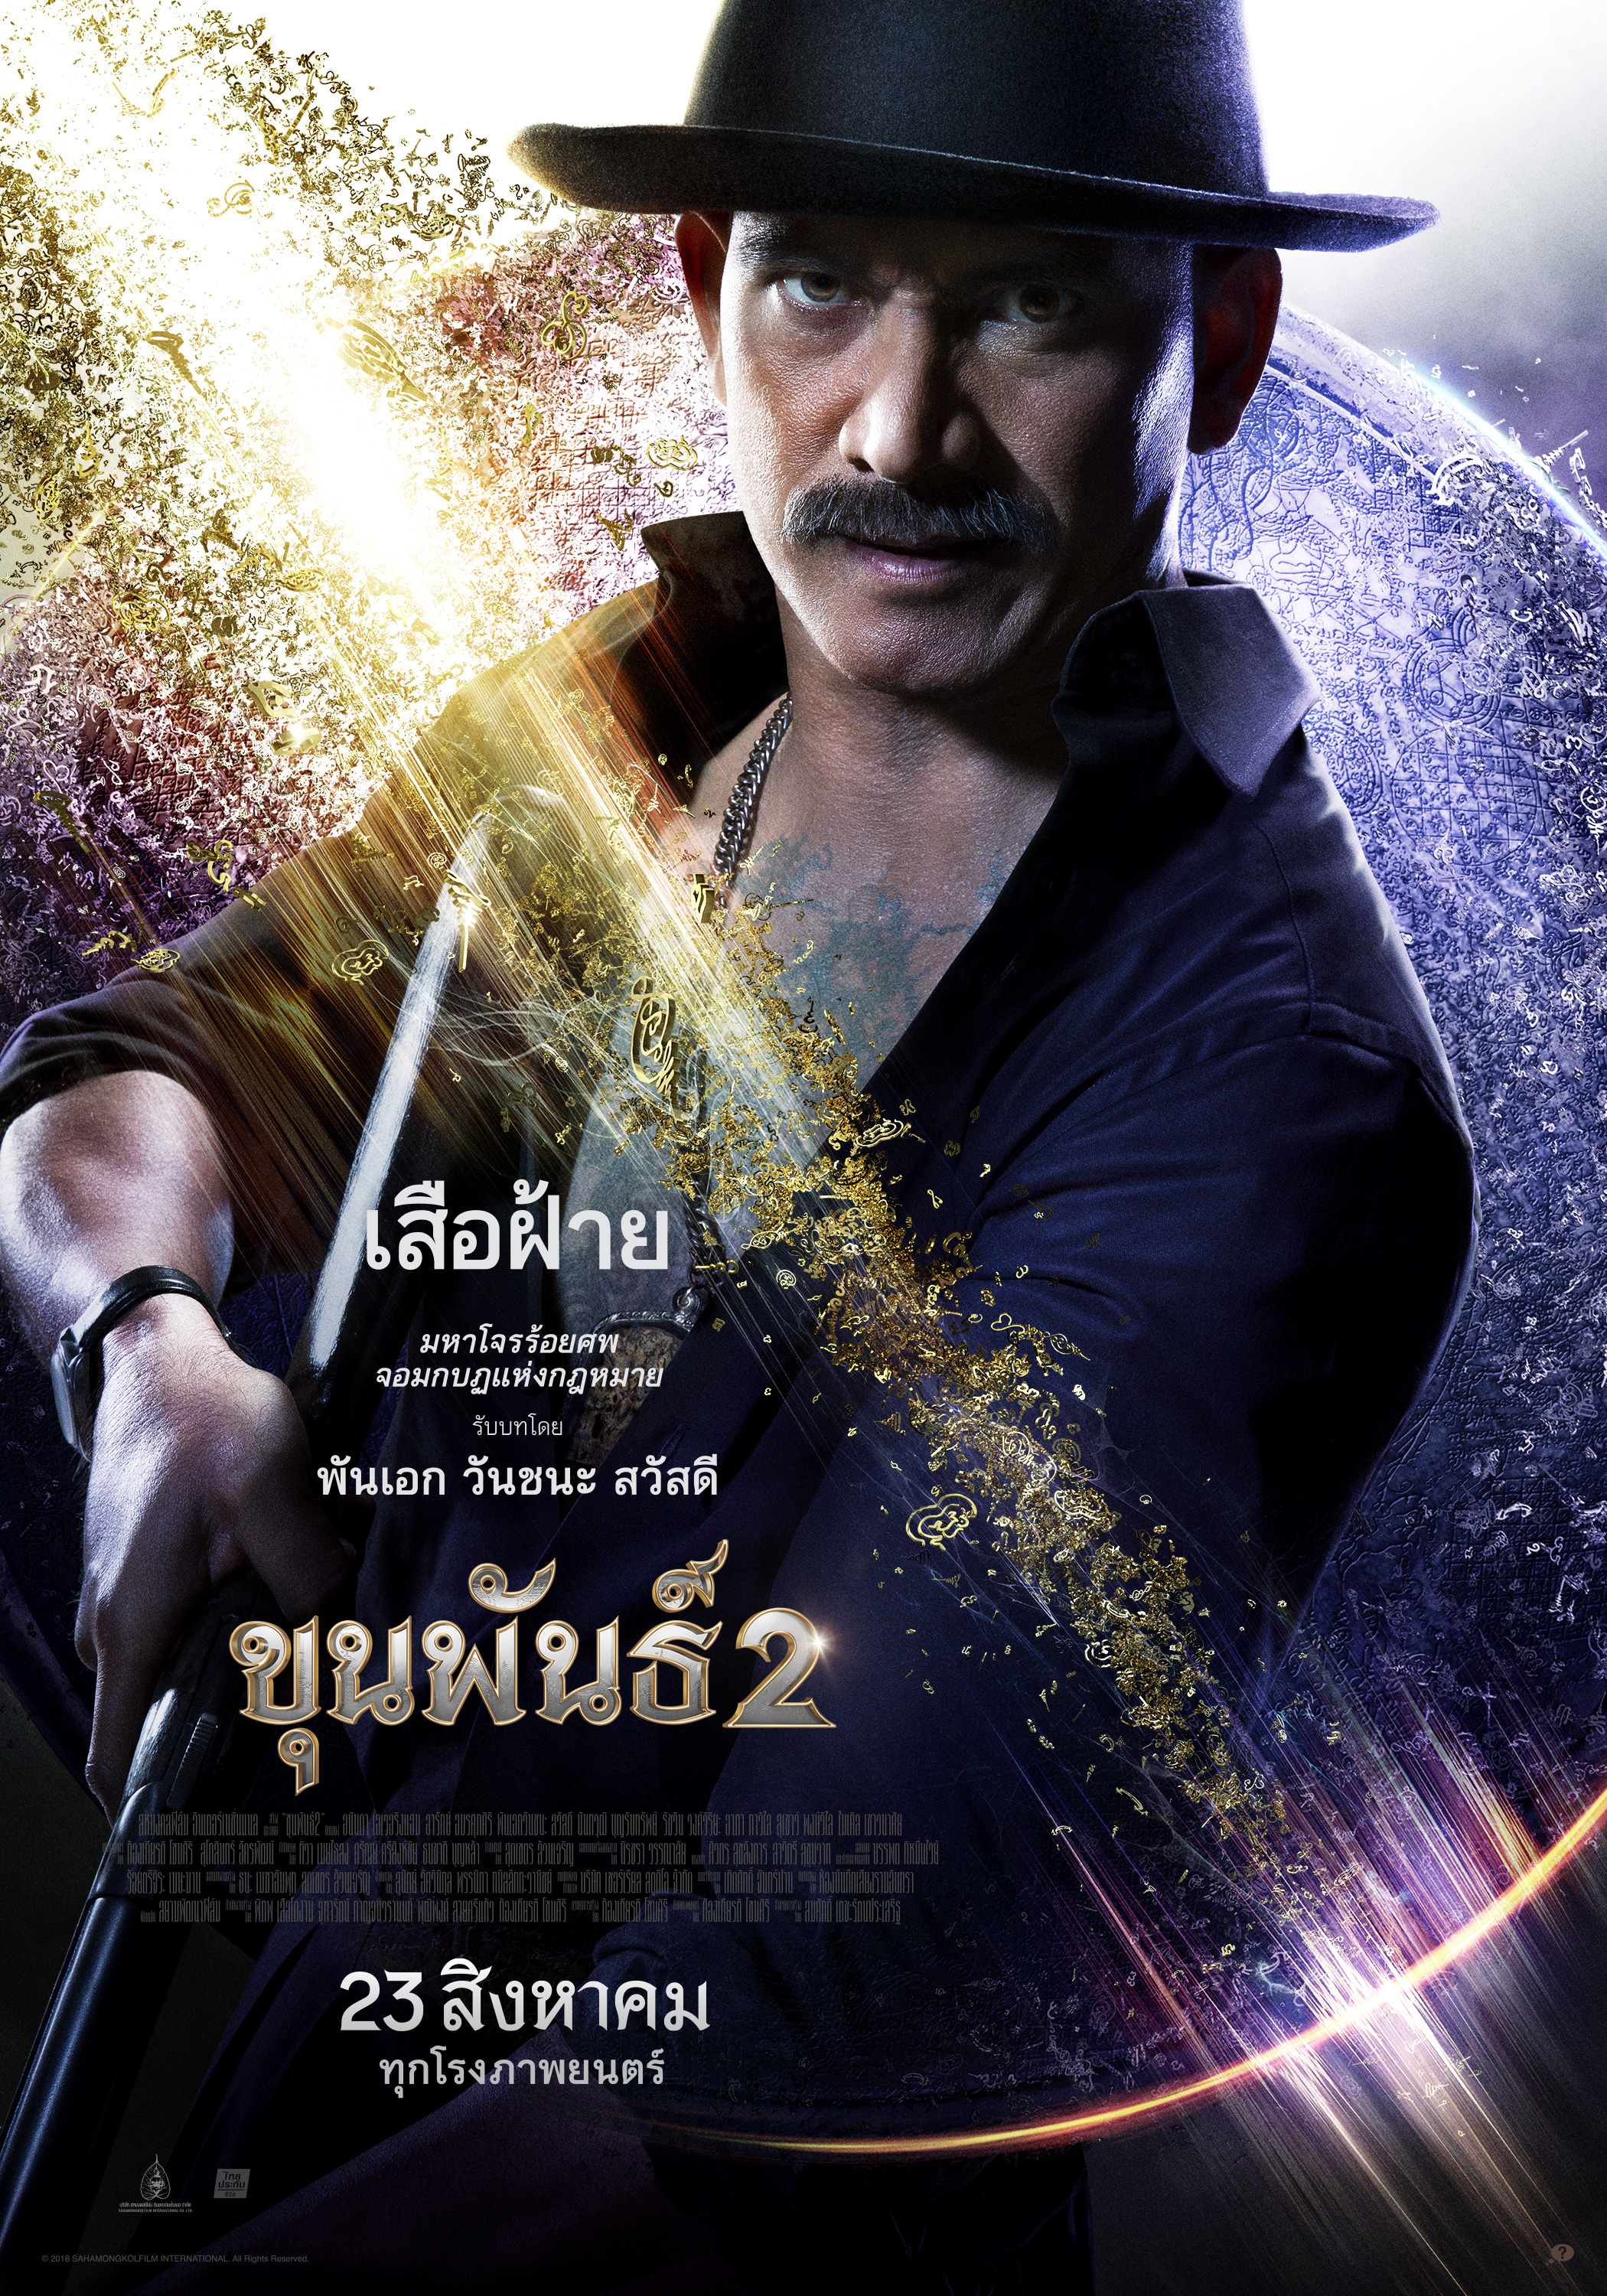 Mega Sized Movie Poster Image for Khun Phan 2 (#5 of 8)